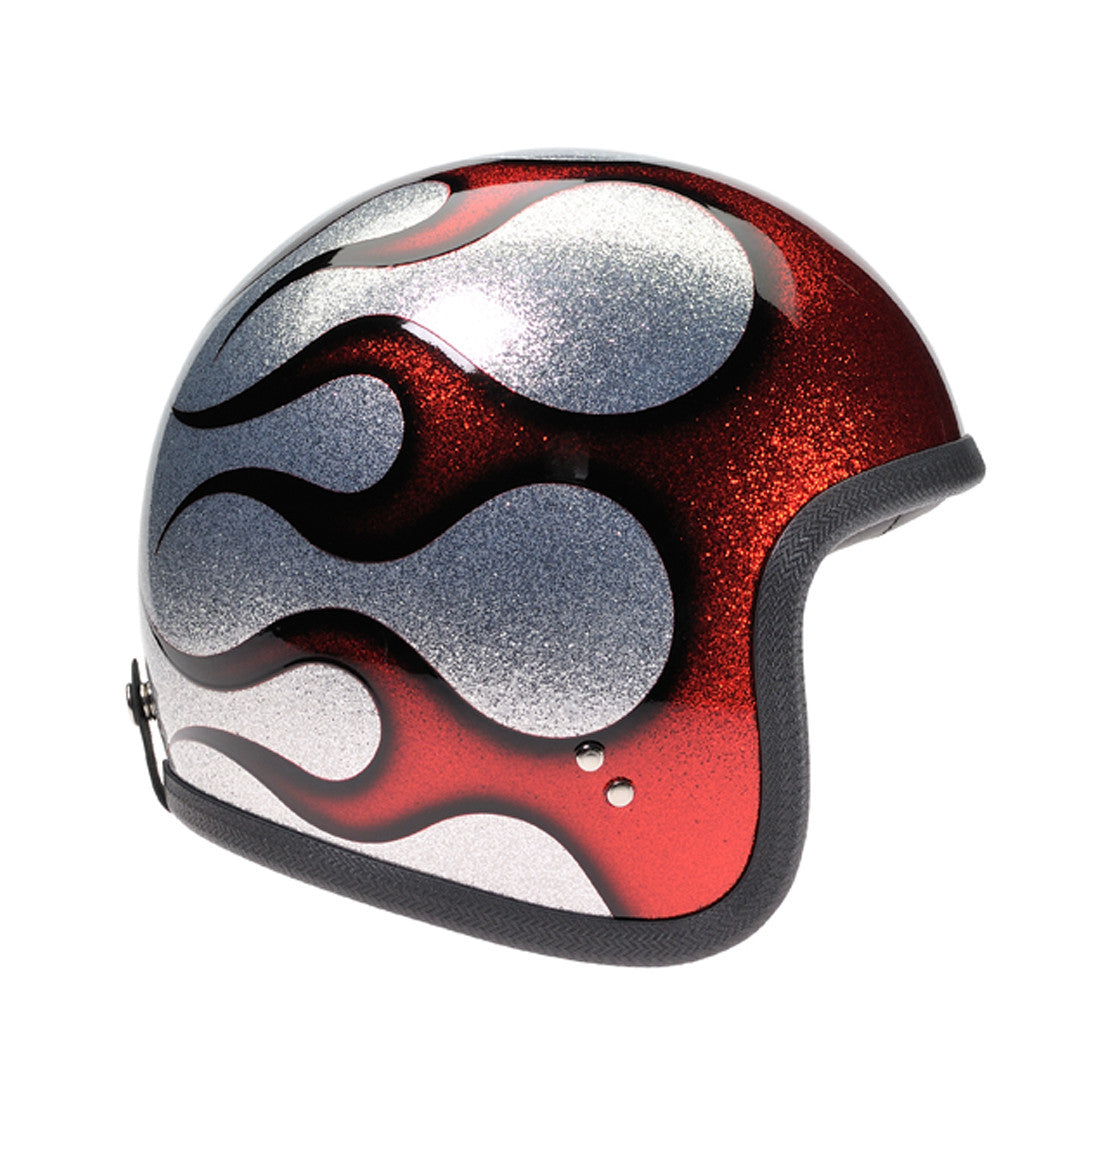 Davida Speedster V3 - Cosmic Flake Silver Red Flames motorcycle helmet